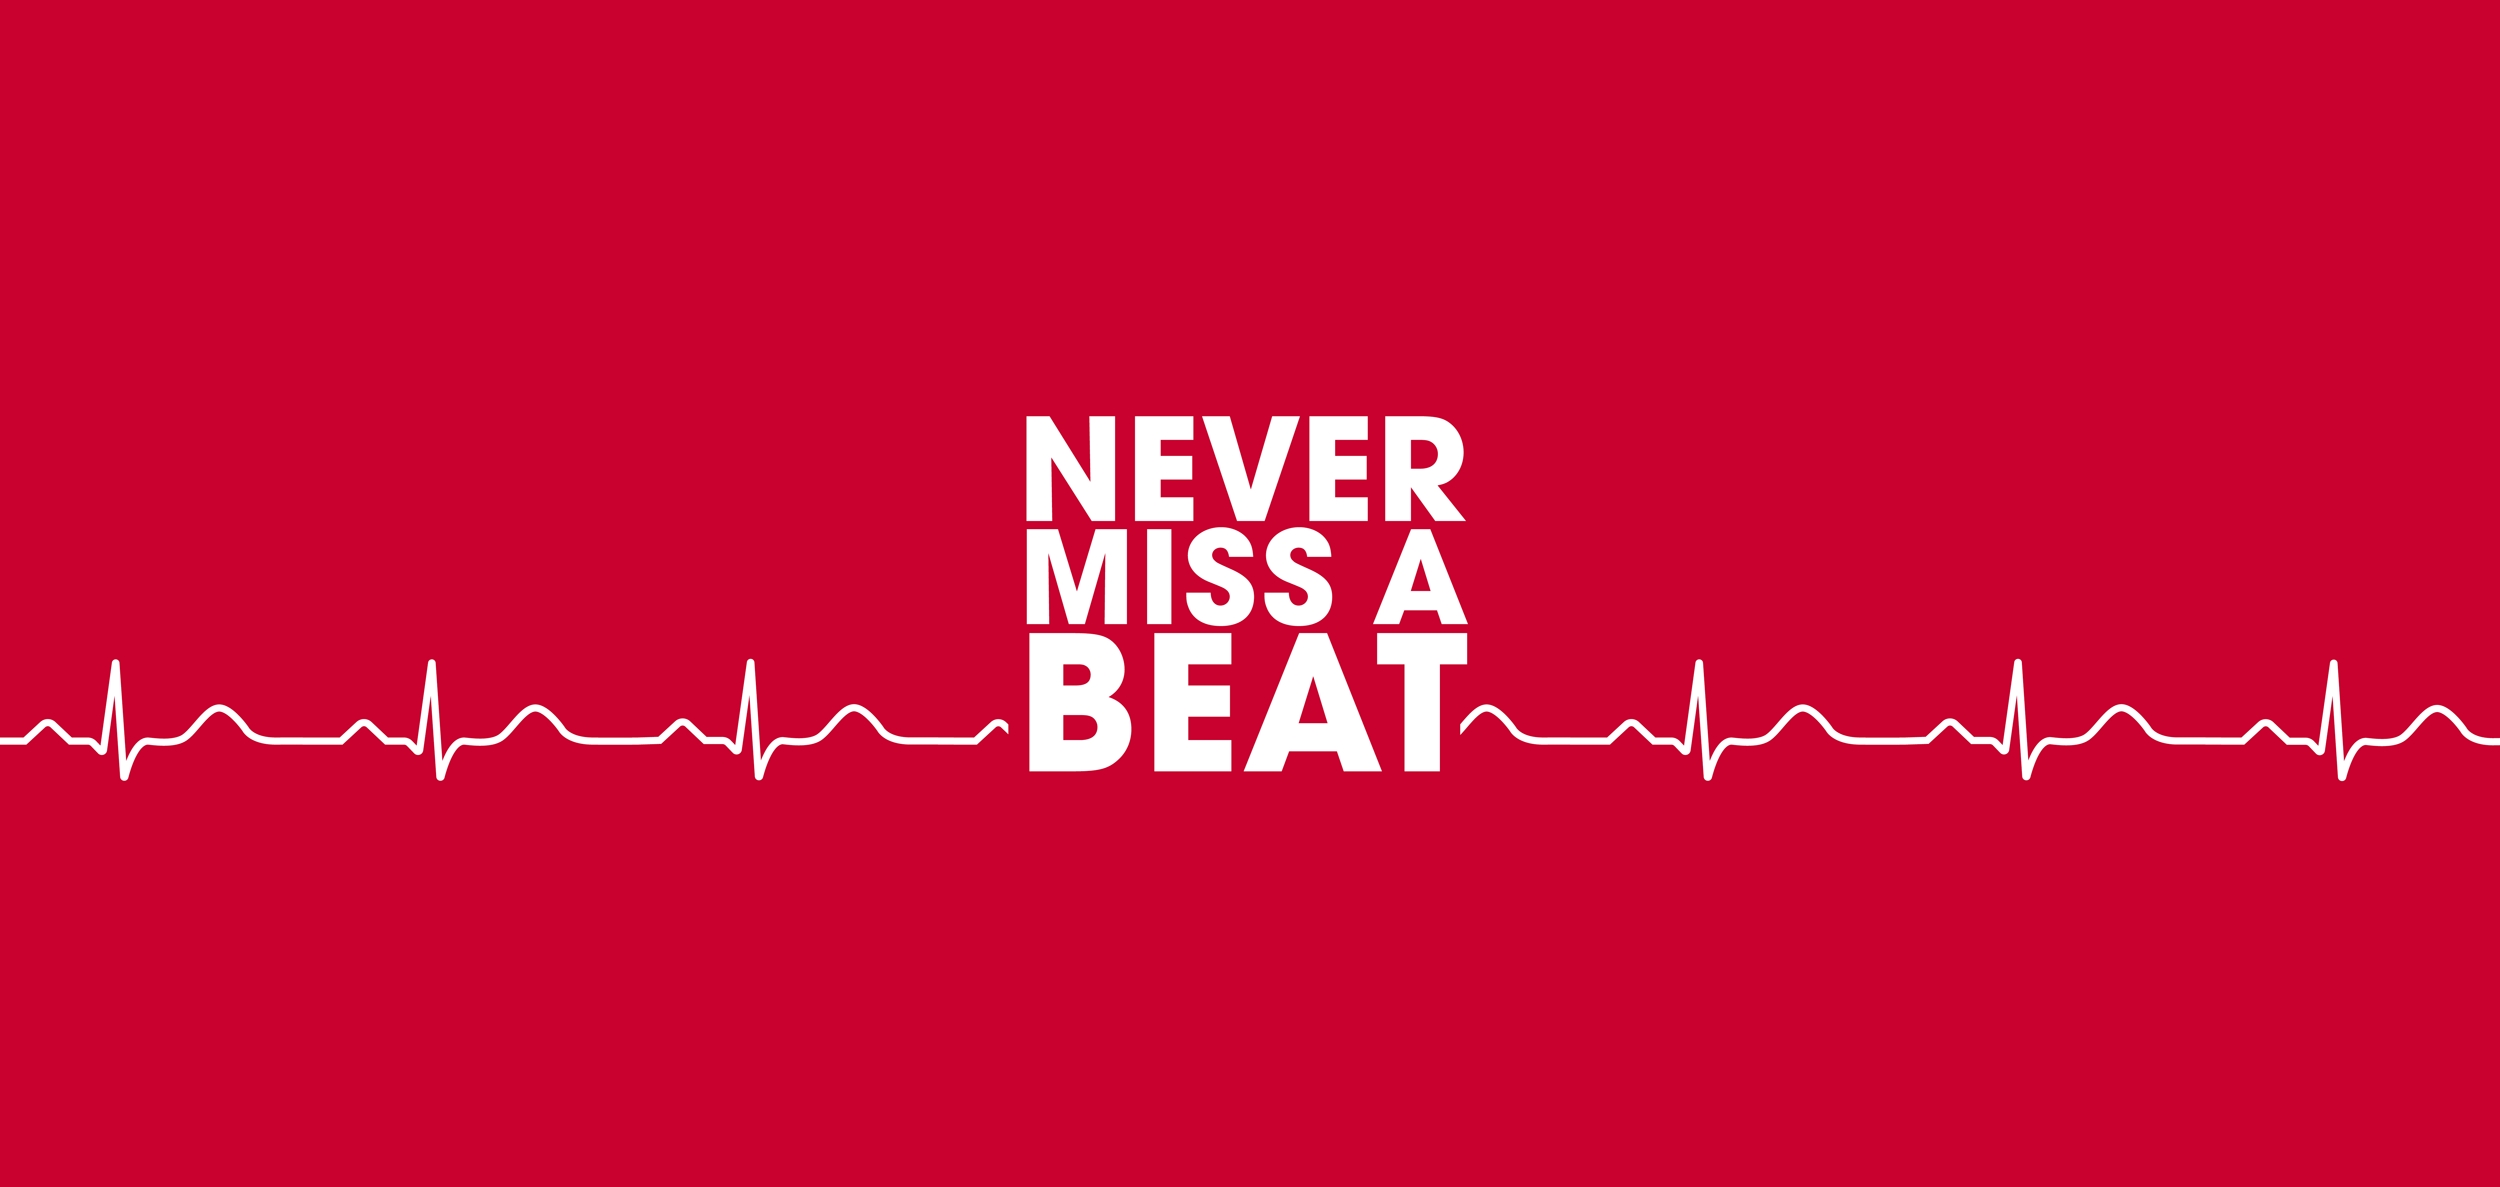 Never miss a beat